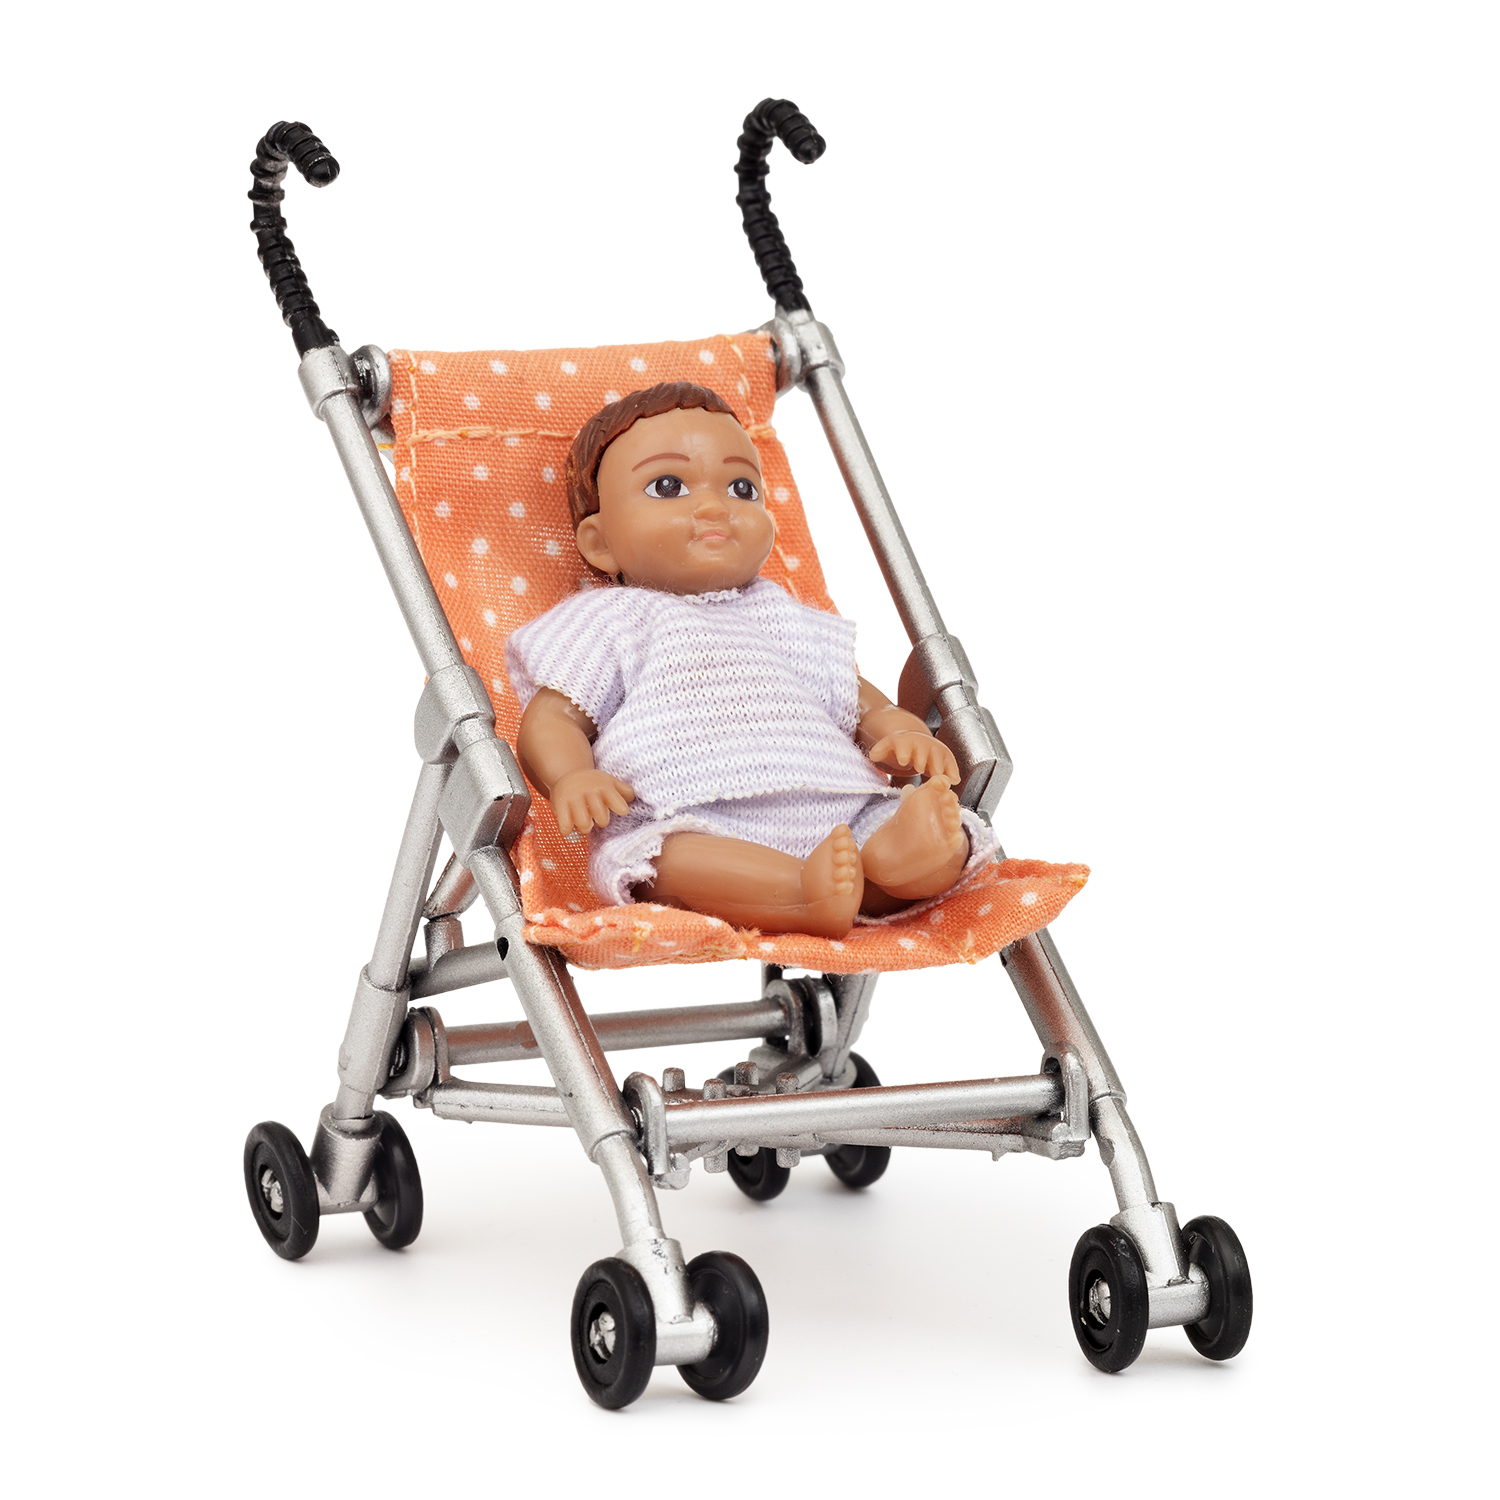 Outlet lundby dukkehusdukke baby & vogn